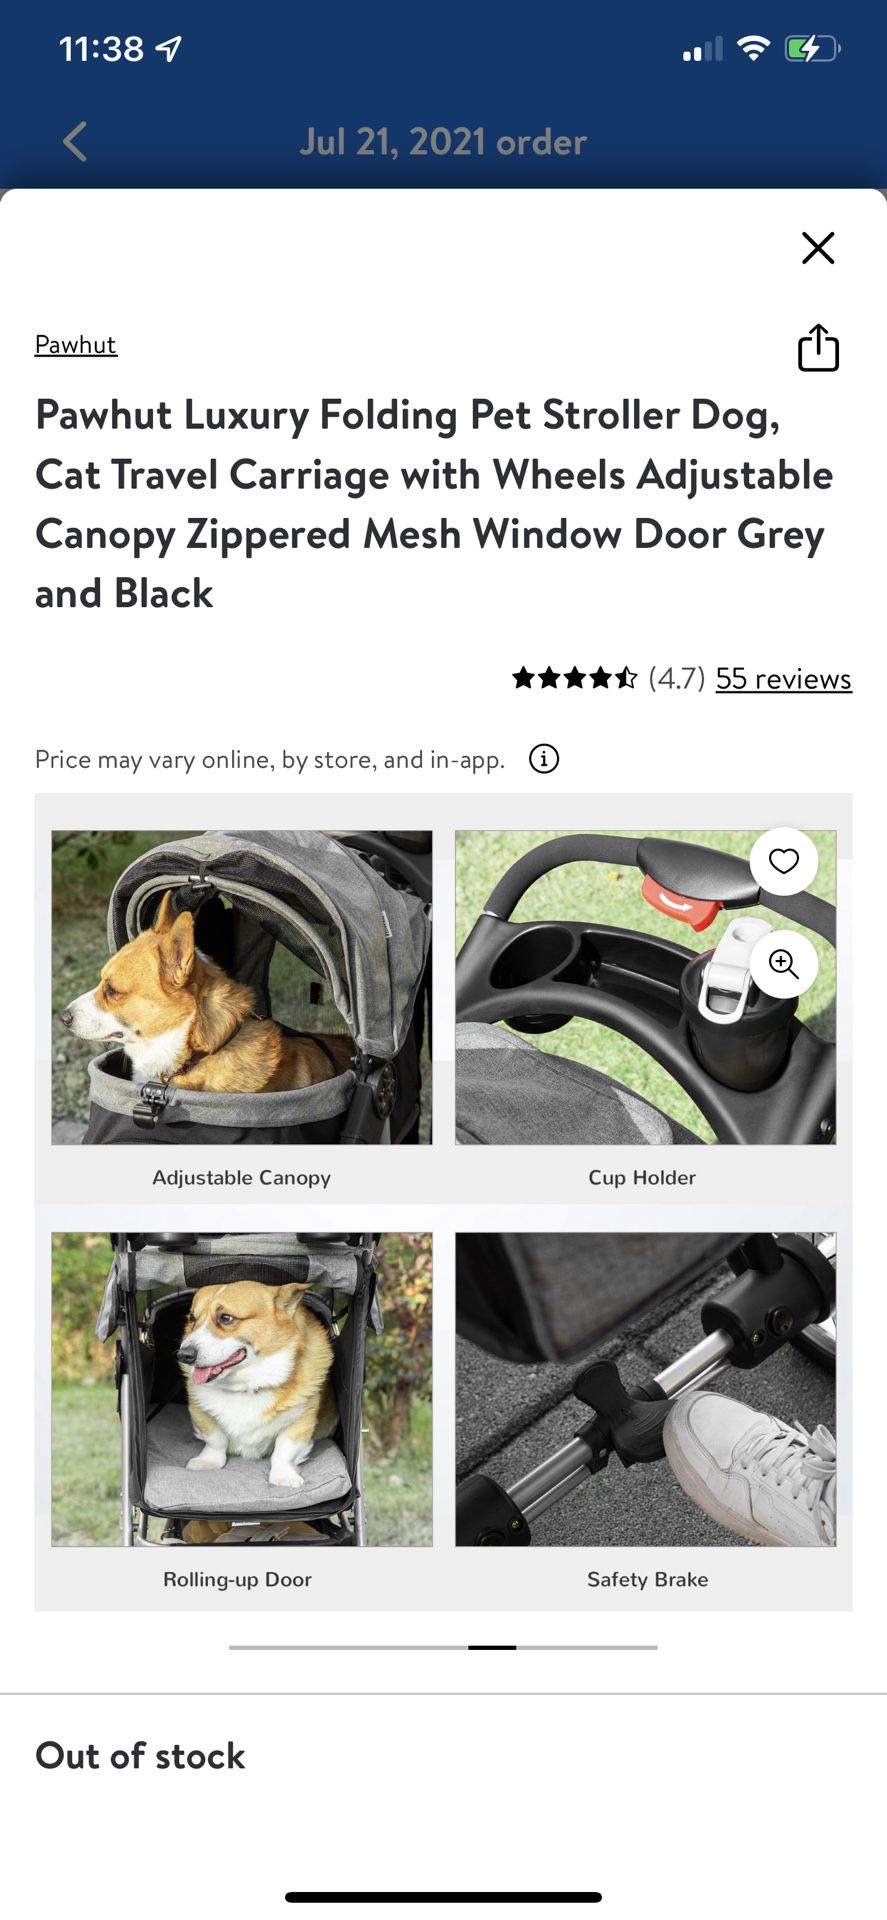 Pawhut Luxury Folding Pet Stroller Dog Cat Tralvel Carriage With Wheels Adjustable Canopy Zippered Mesh Window Door Grey And Black